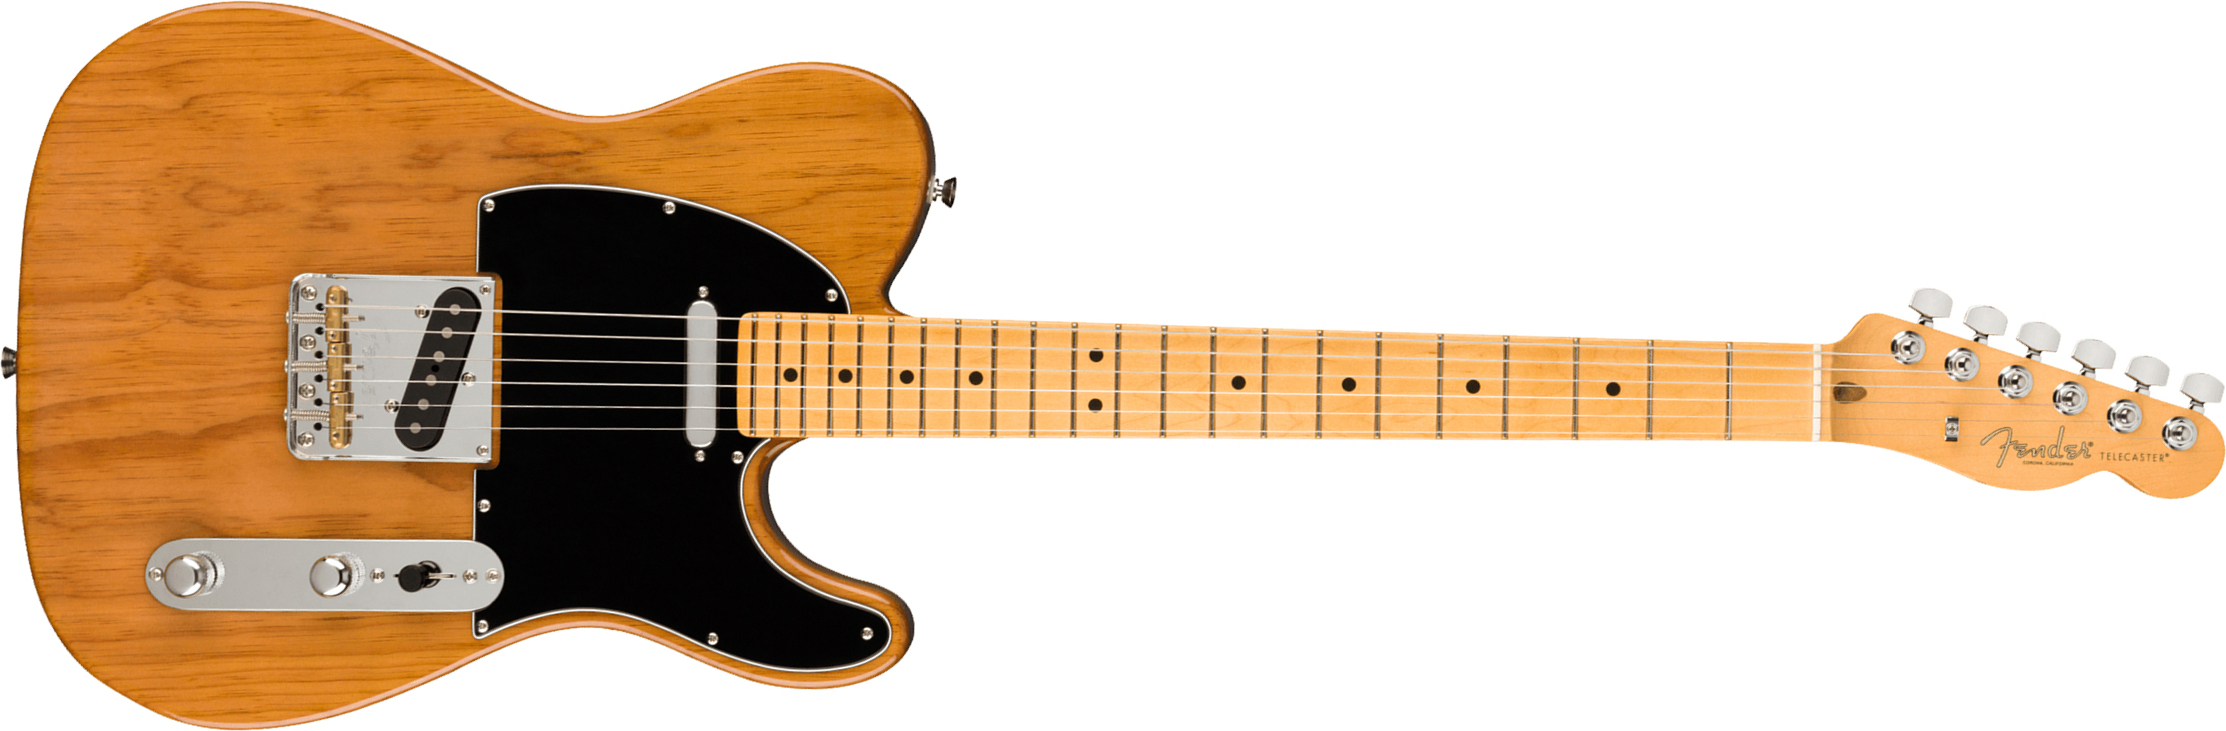 Fender Tele American Professional Ii Usa Mn - Roasted Pine - Guitarra eléctrica con forma de tel - Main picture